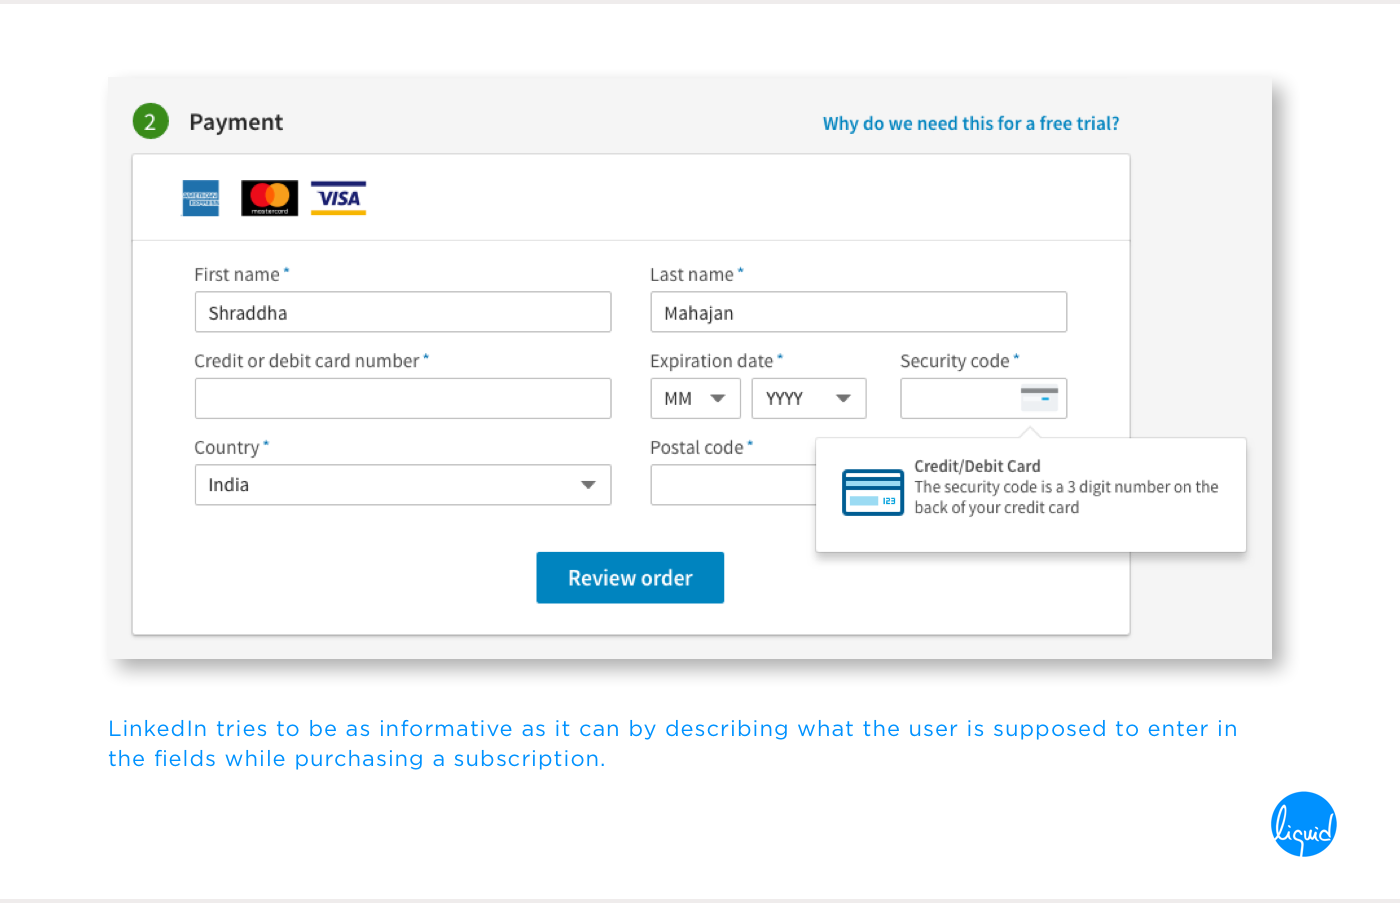 Microcopy on LinkedIn premium subscription payment process